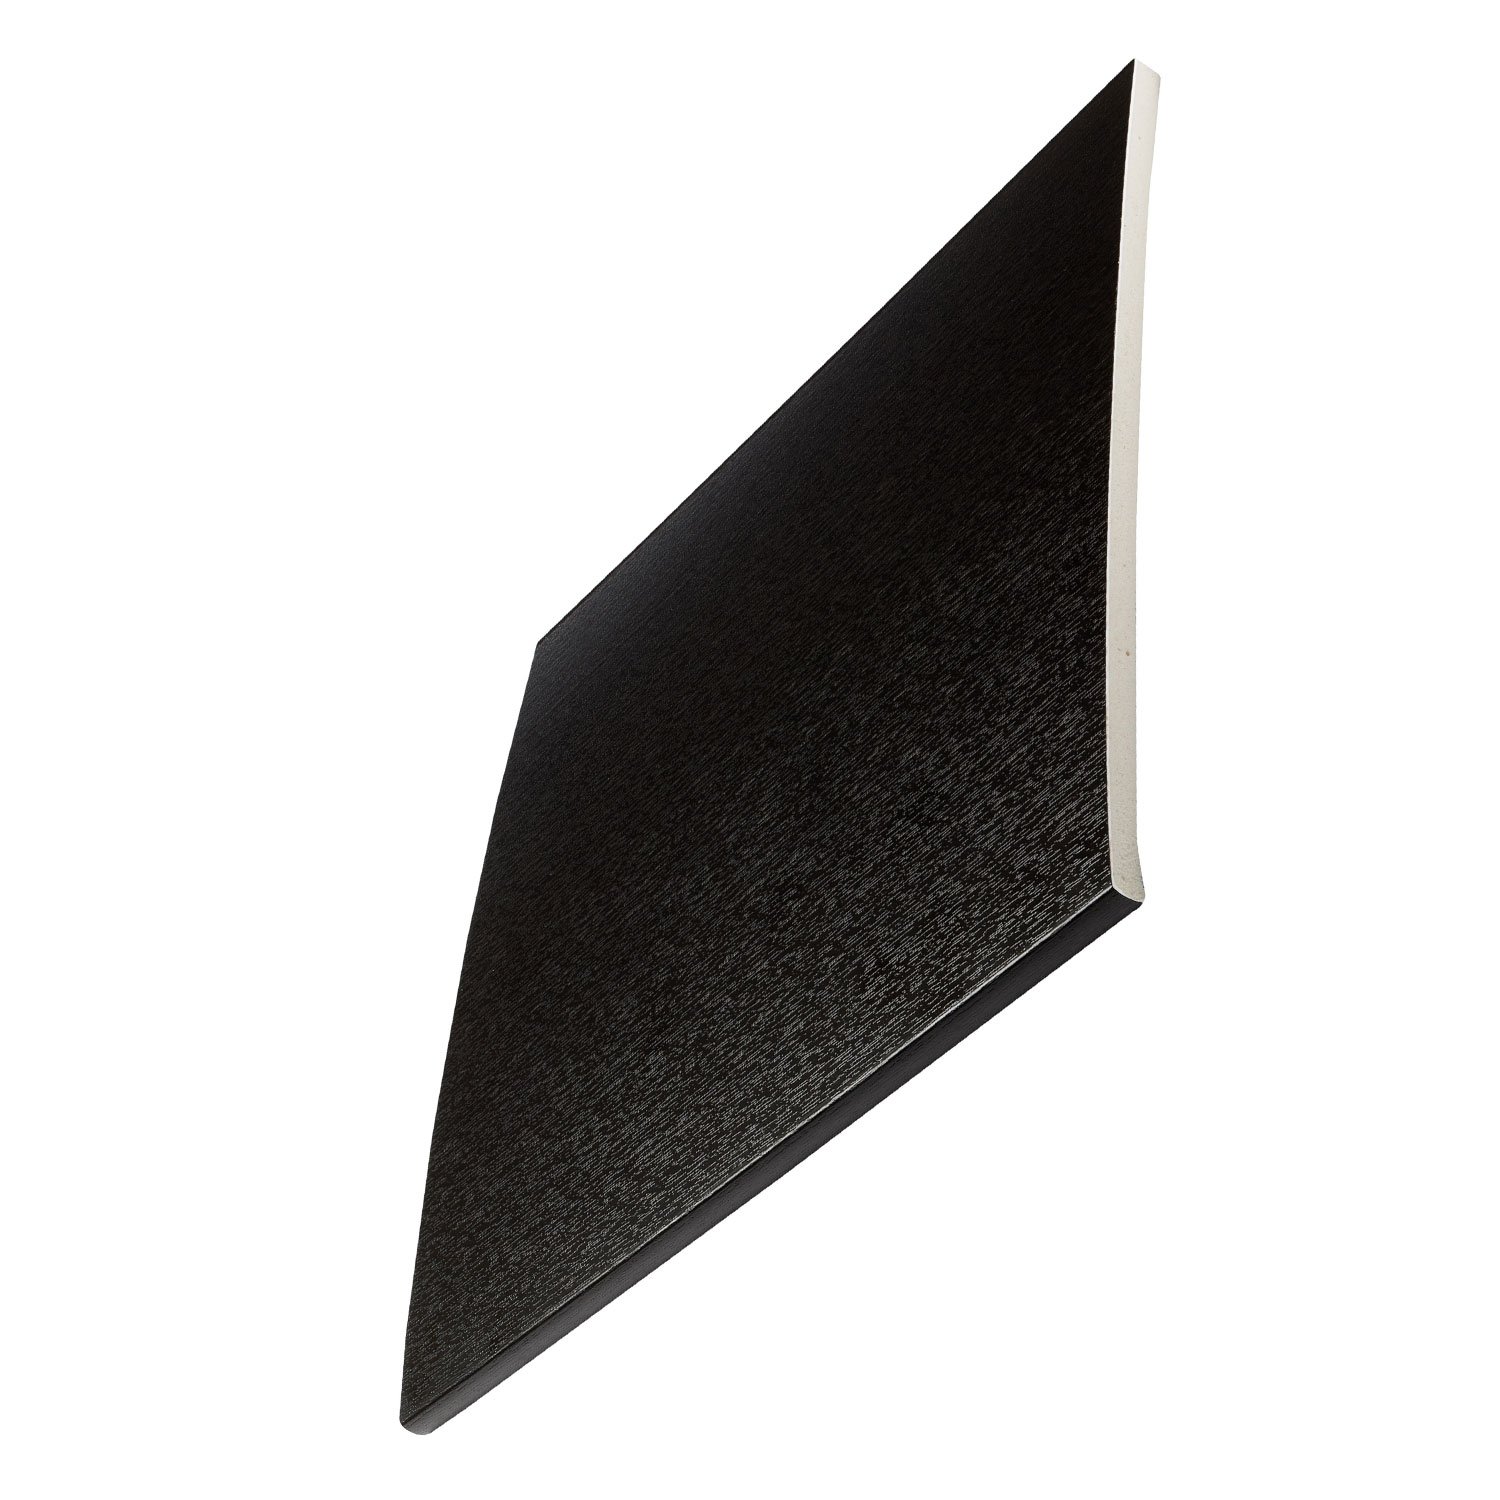 9mm Black Ash General Purpose Boards